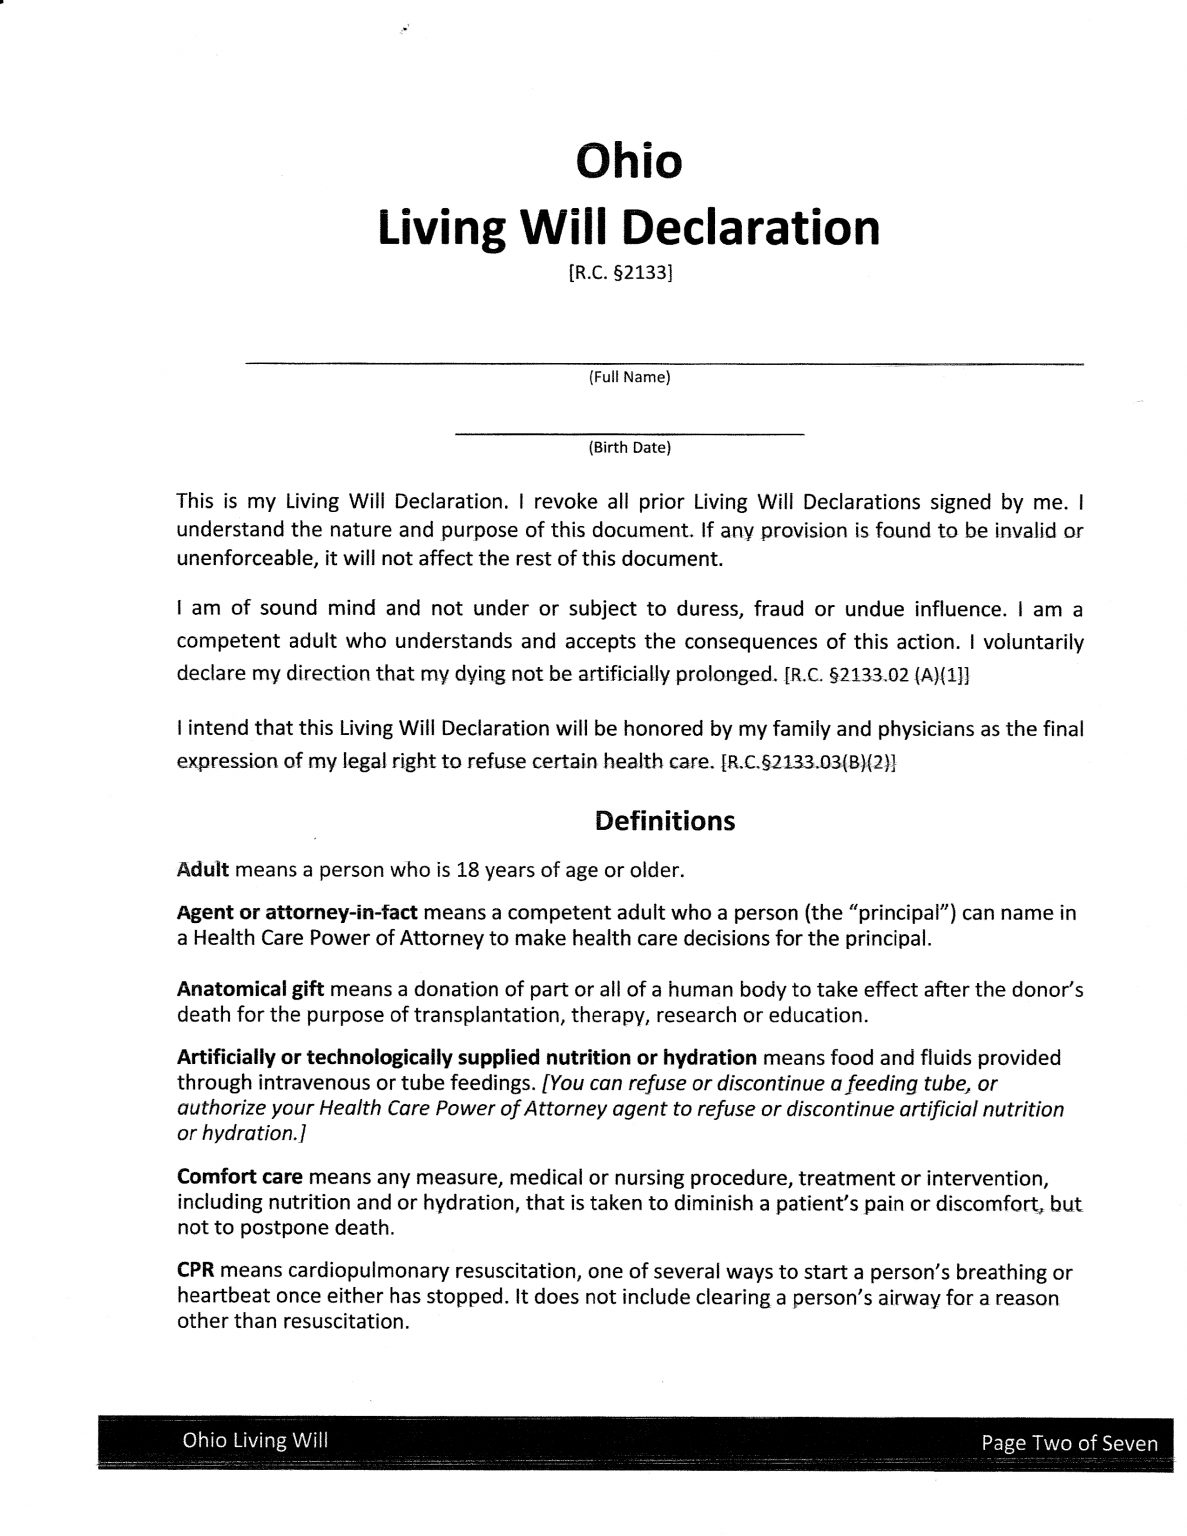 Ohio Living Will Declaration Form Camp Washington